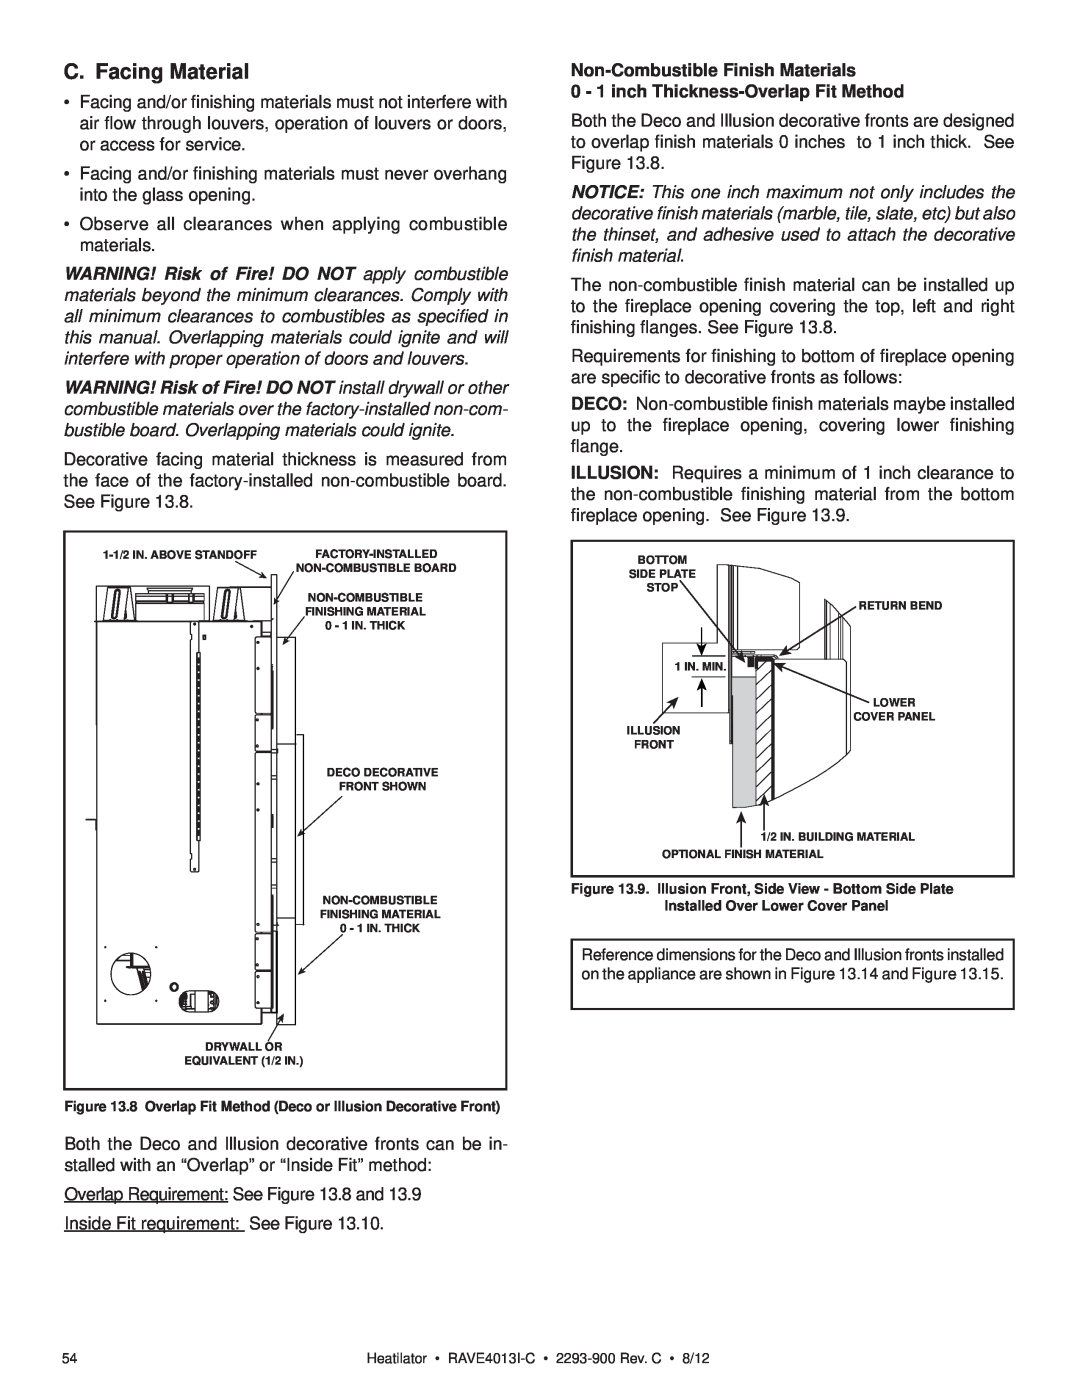 Heatiator Rave4013i-c C. Facing Material, Non-CombustibleFinish Materials, 0 - 1 inch Thickness-OverlapFit Method 